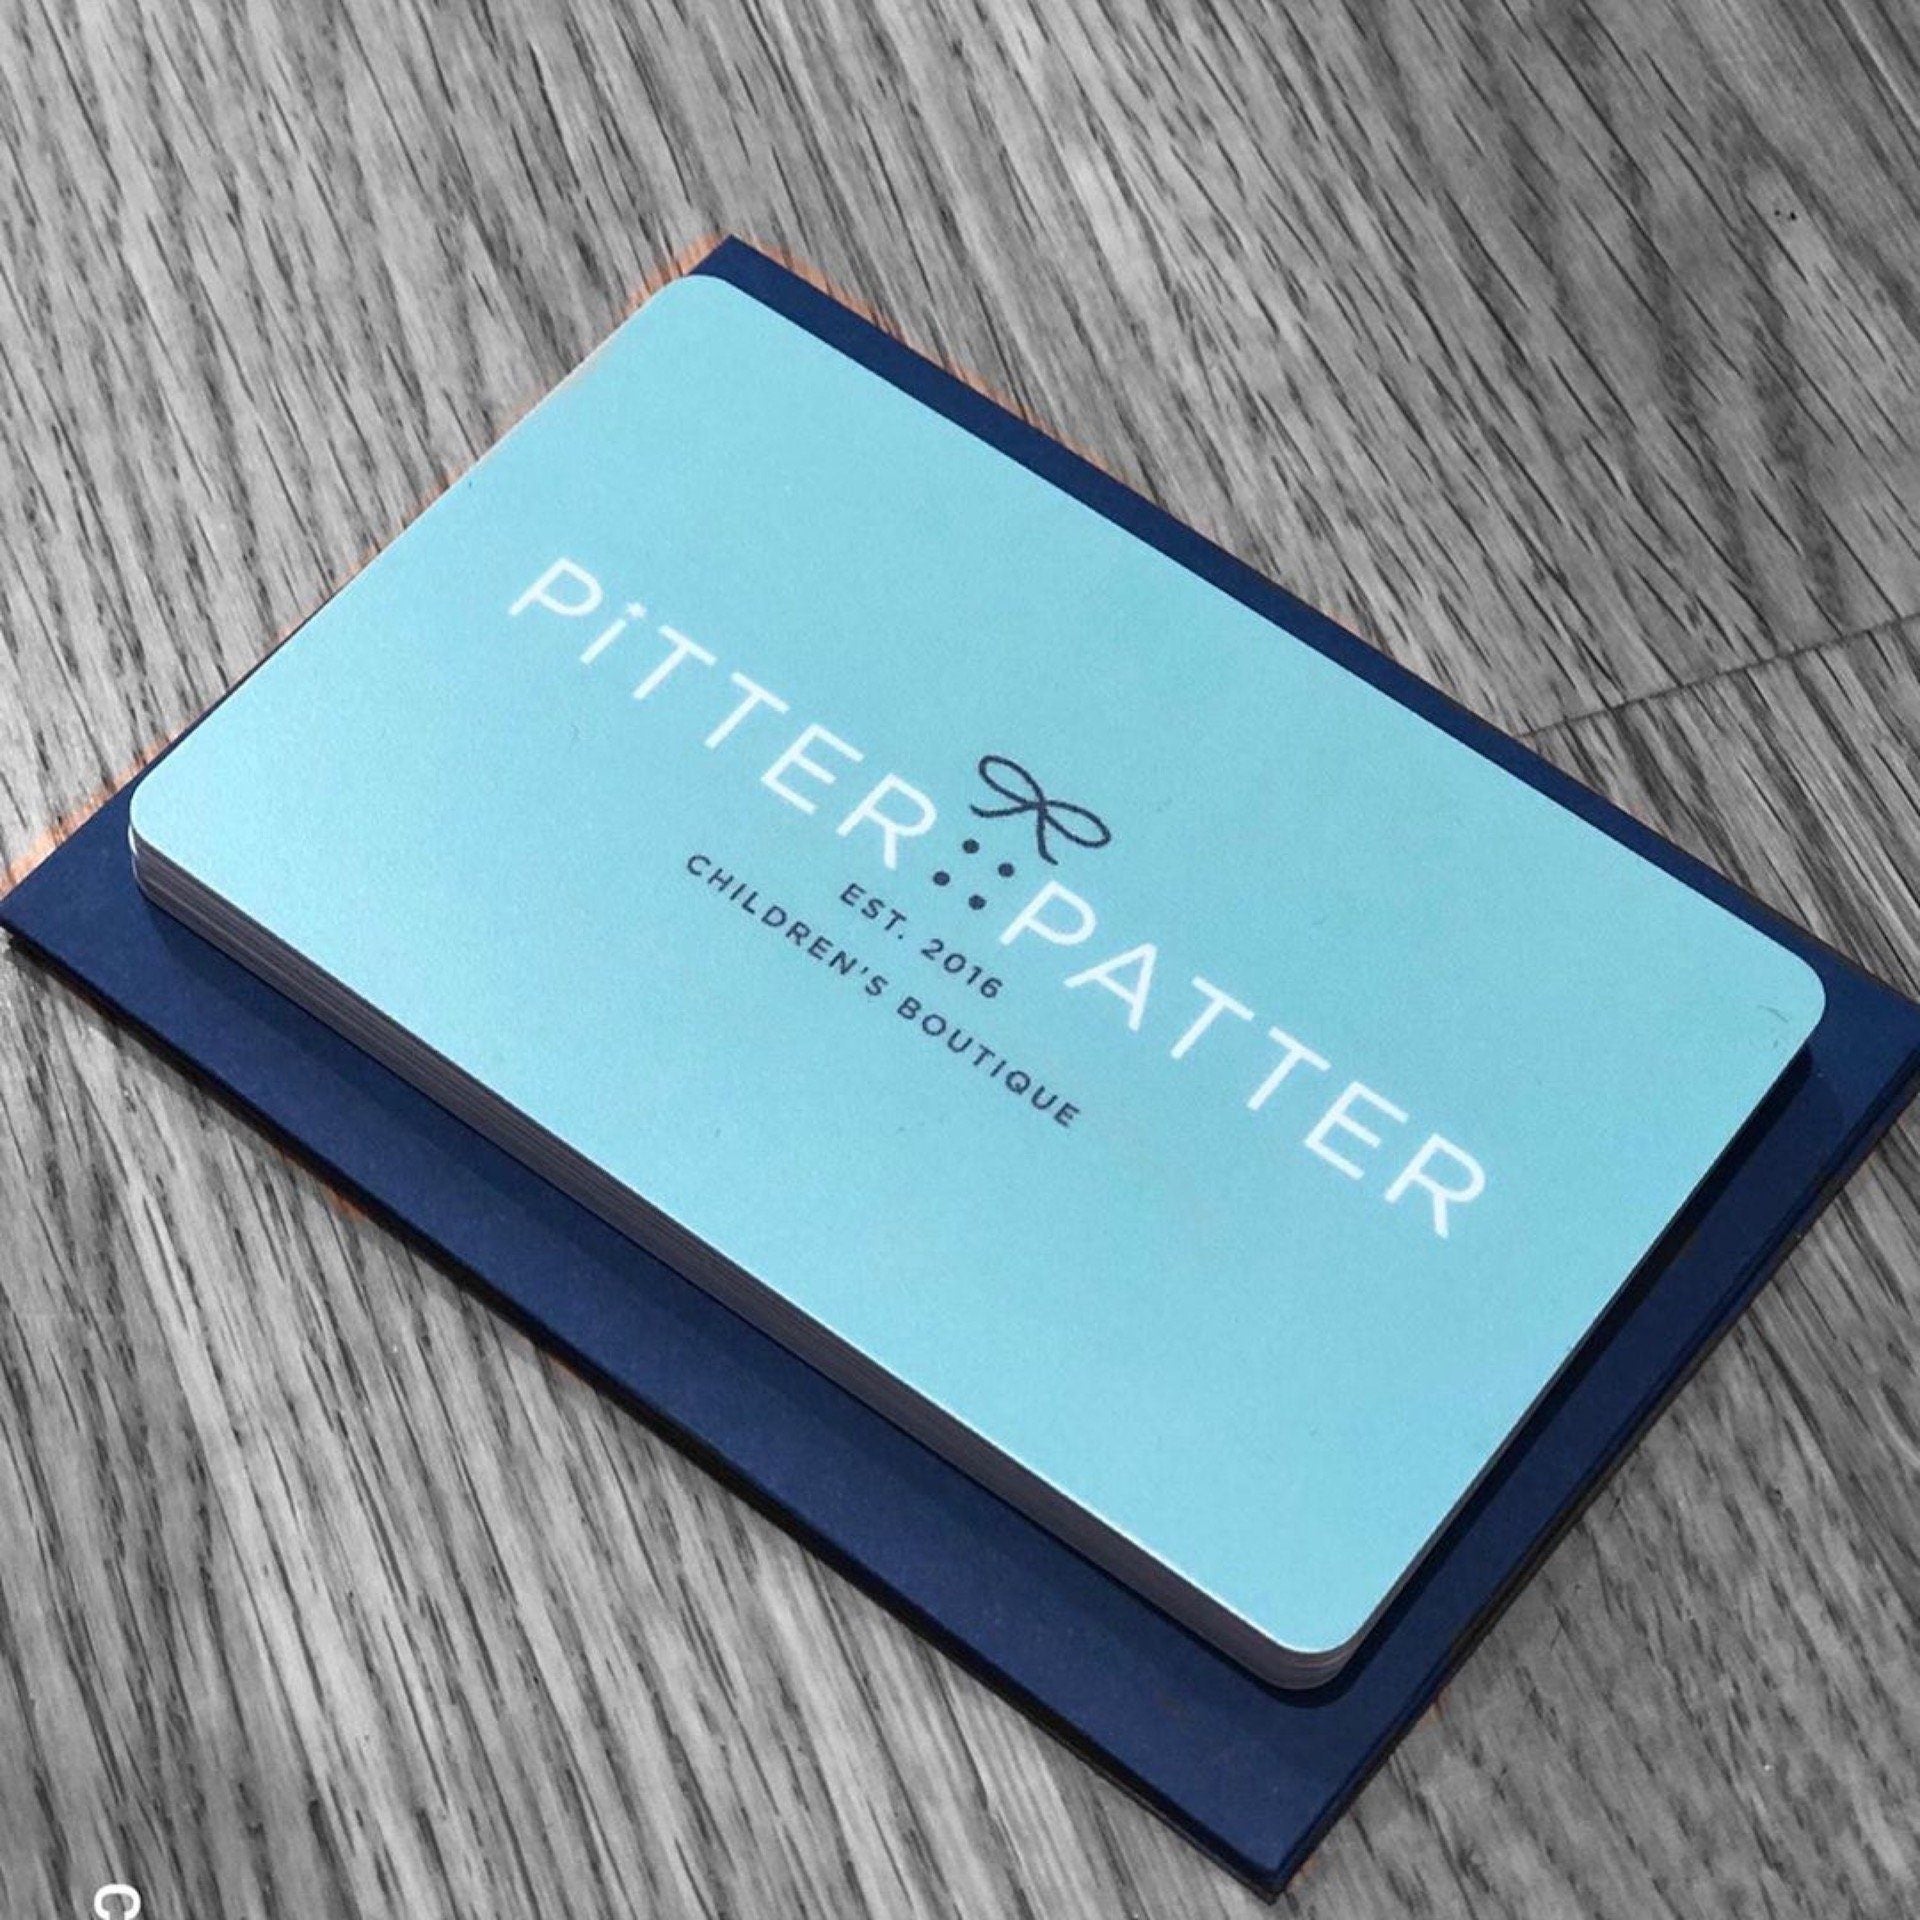 Pitter Patter Digital Gift Card - $5.00